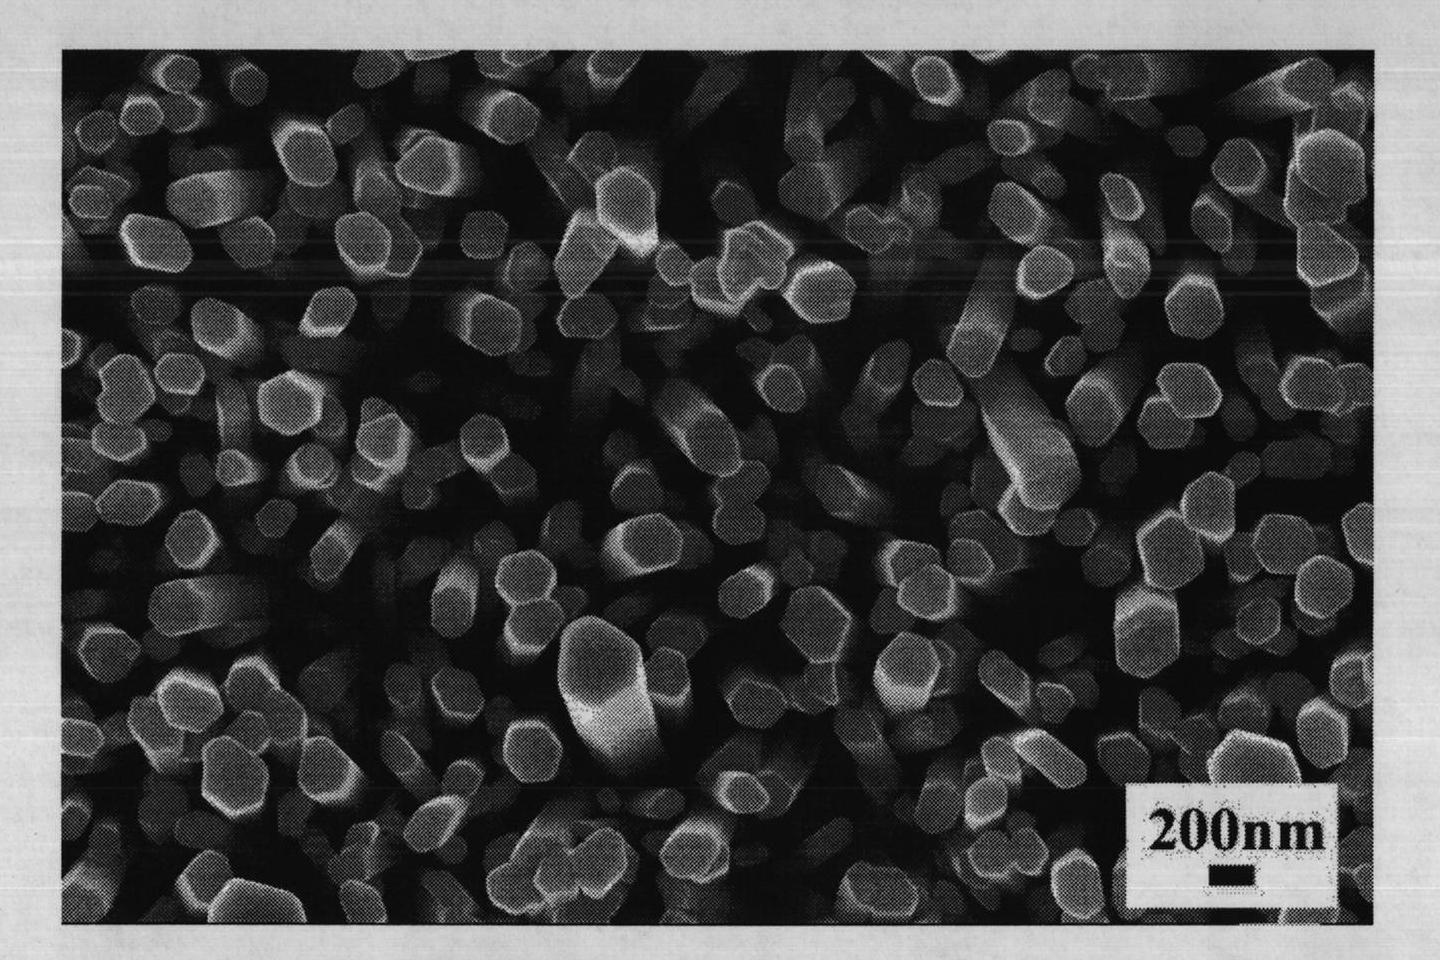 Method for preparing Al2O3-ZnO nanorod array composite electrode